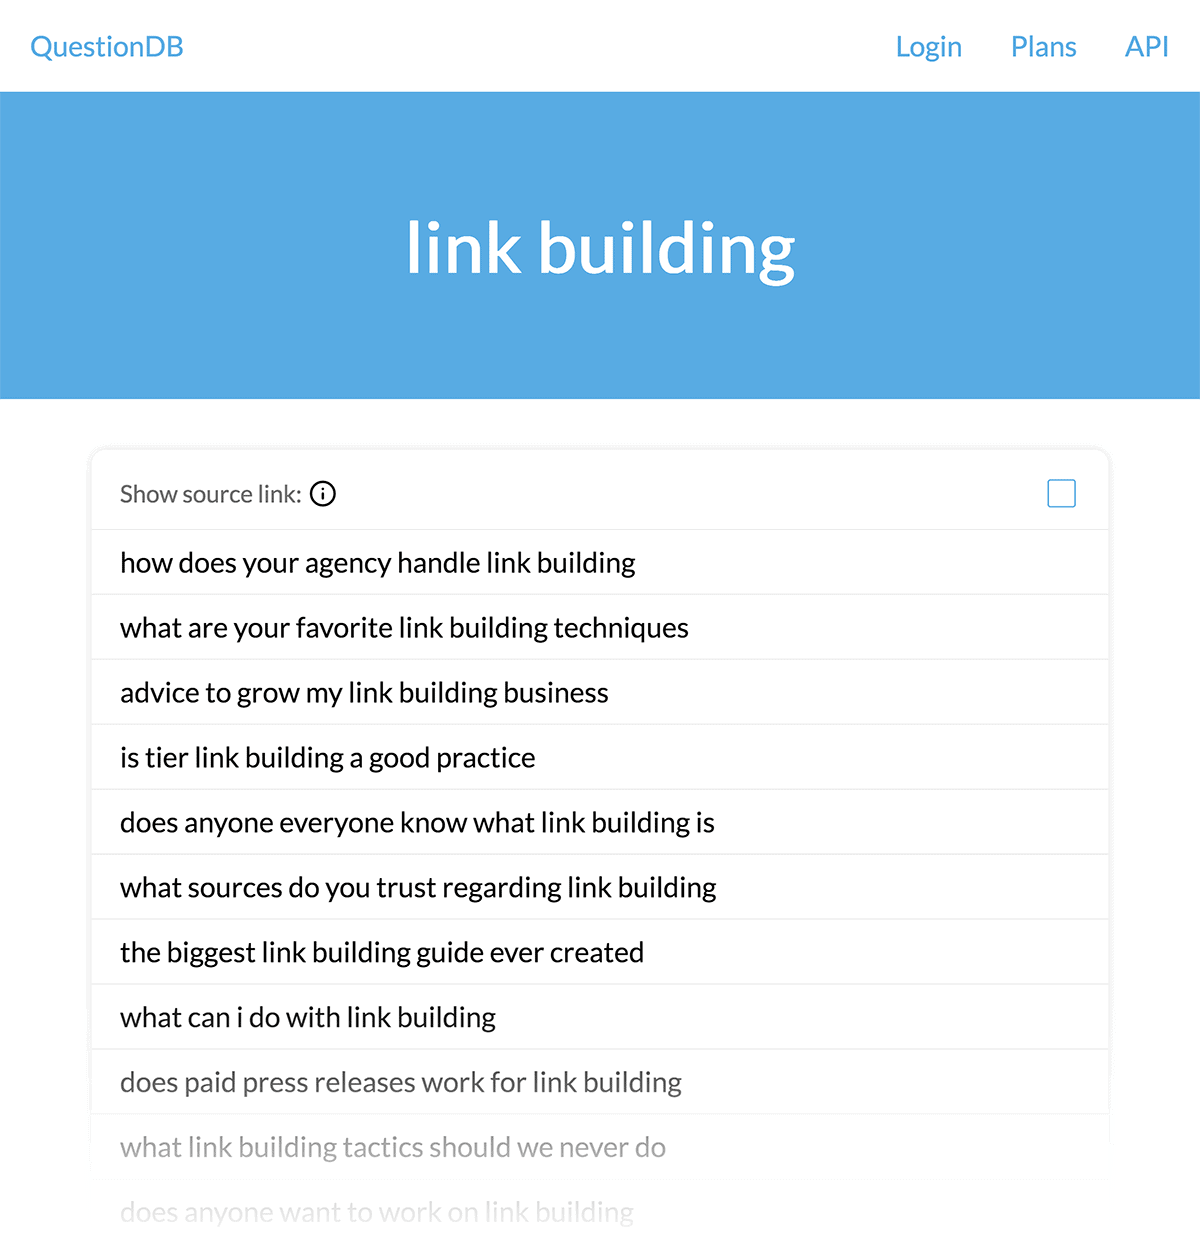 QuestionDB – 'link building' results